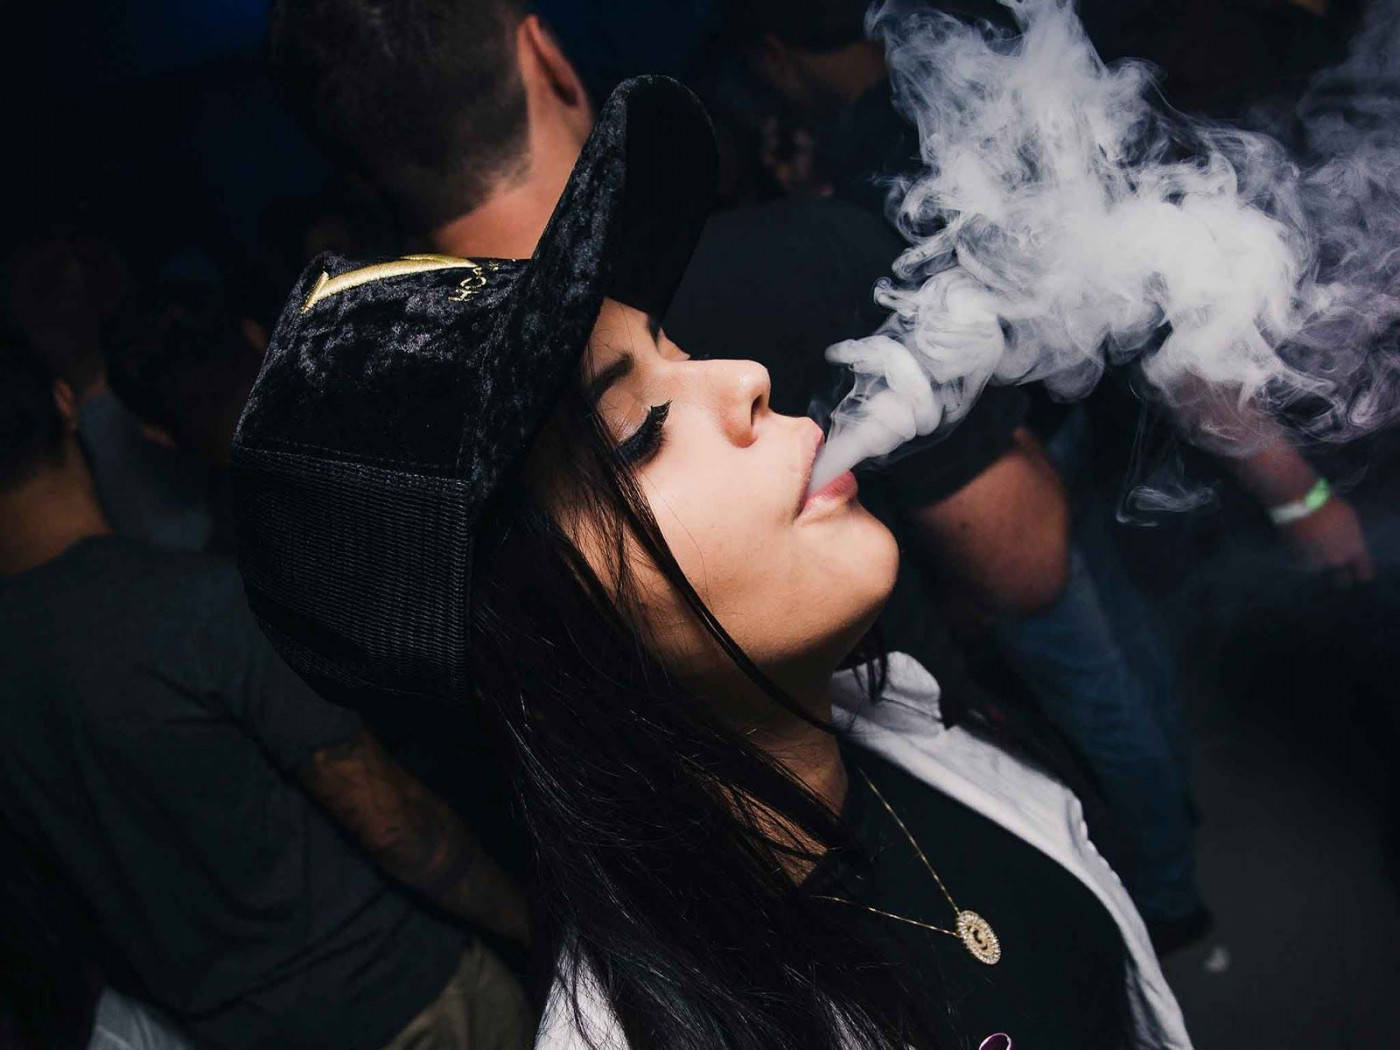 Attitude Girl Exhaling Smoke Background